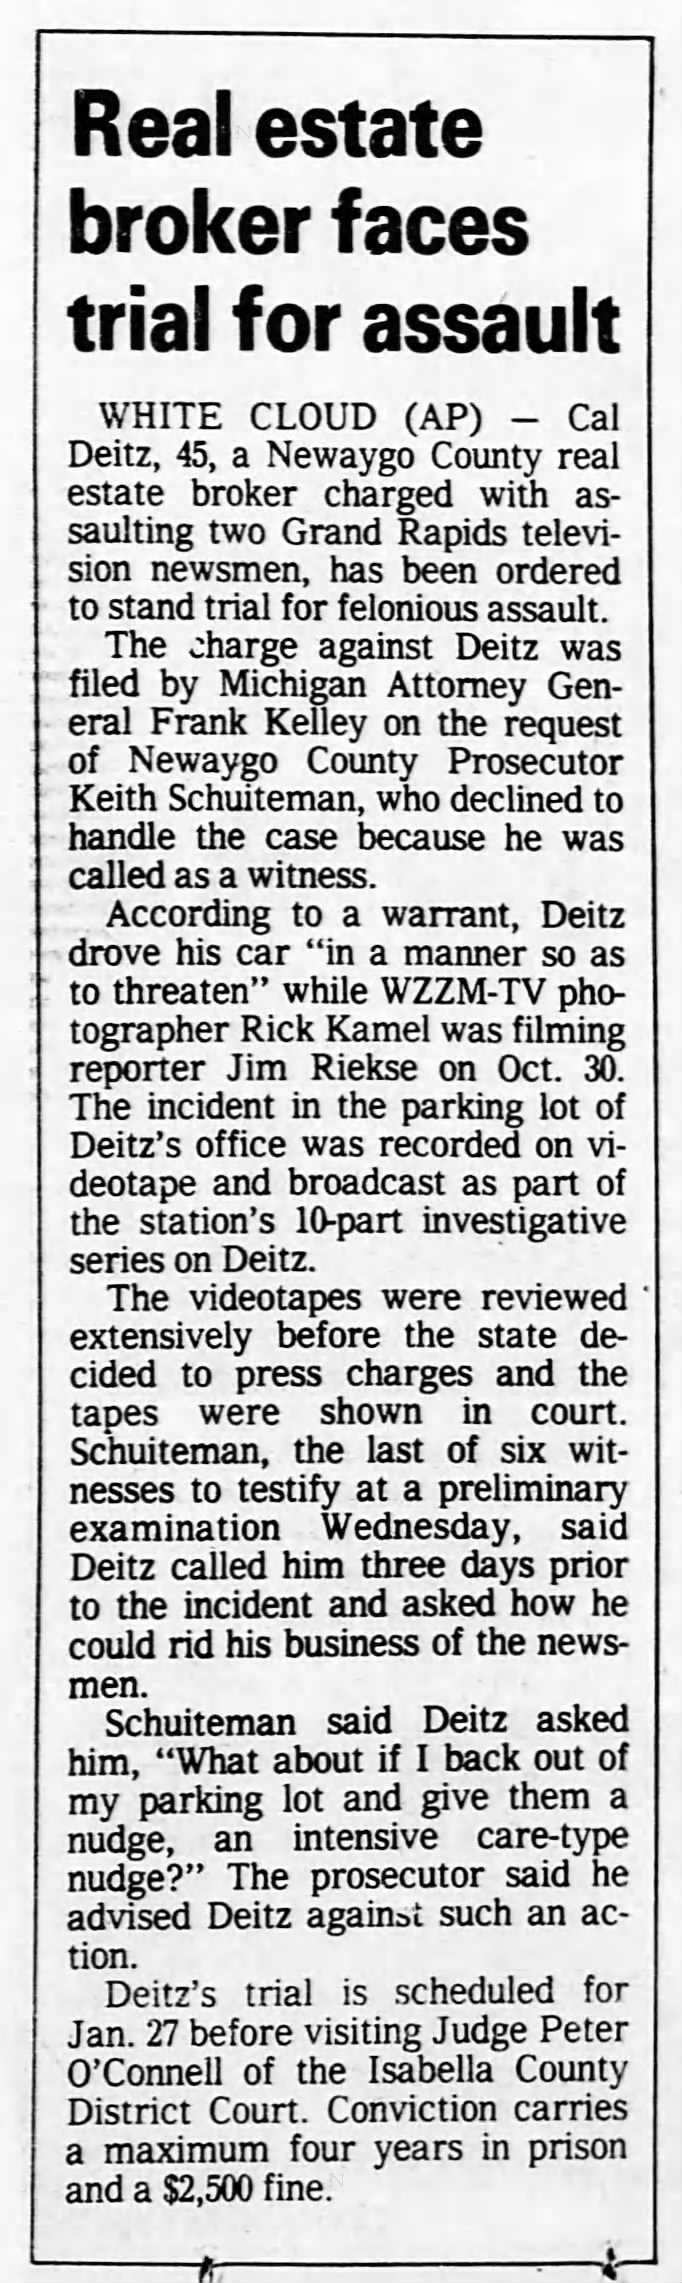 Real estate broker faces assault Jan 22, 1981 Lansing State Journal